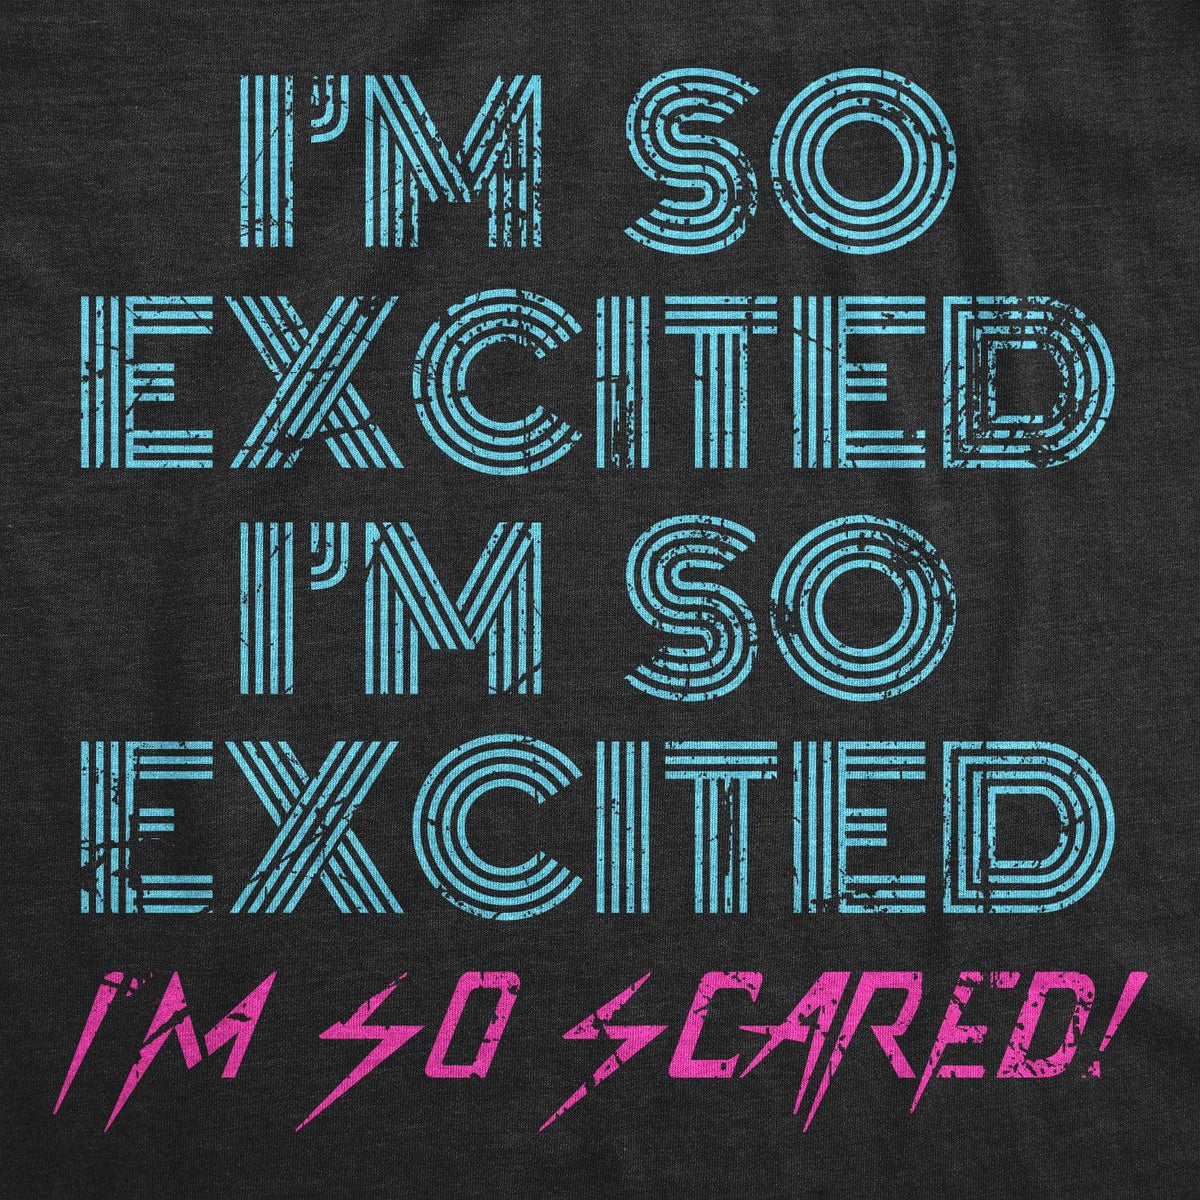 I&#39;m So Excited I&#39;m So Scared Men&#39;s Tshirt  -  Crazy Dog T-Shirts